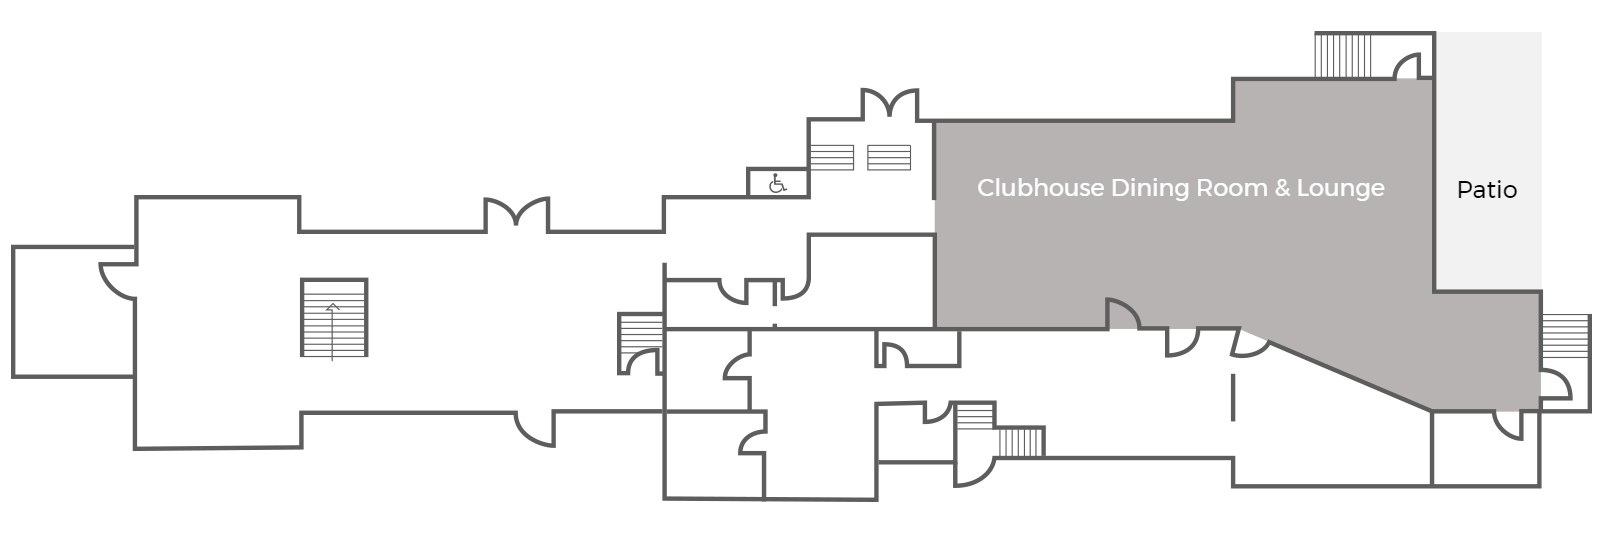 Ground level floor plan of Whirlpool Restaurant